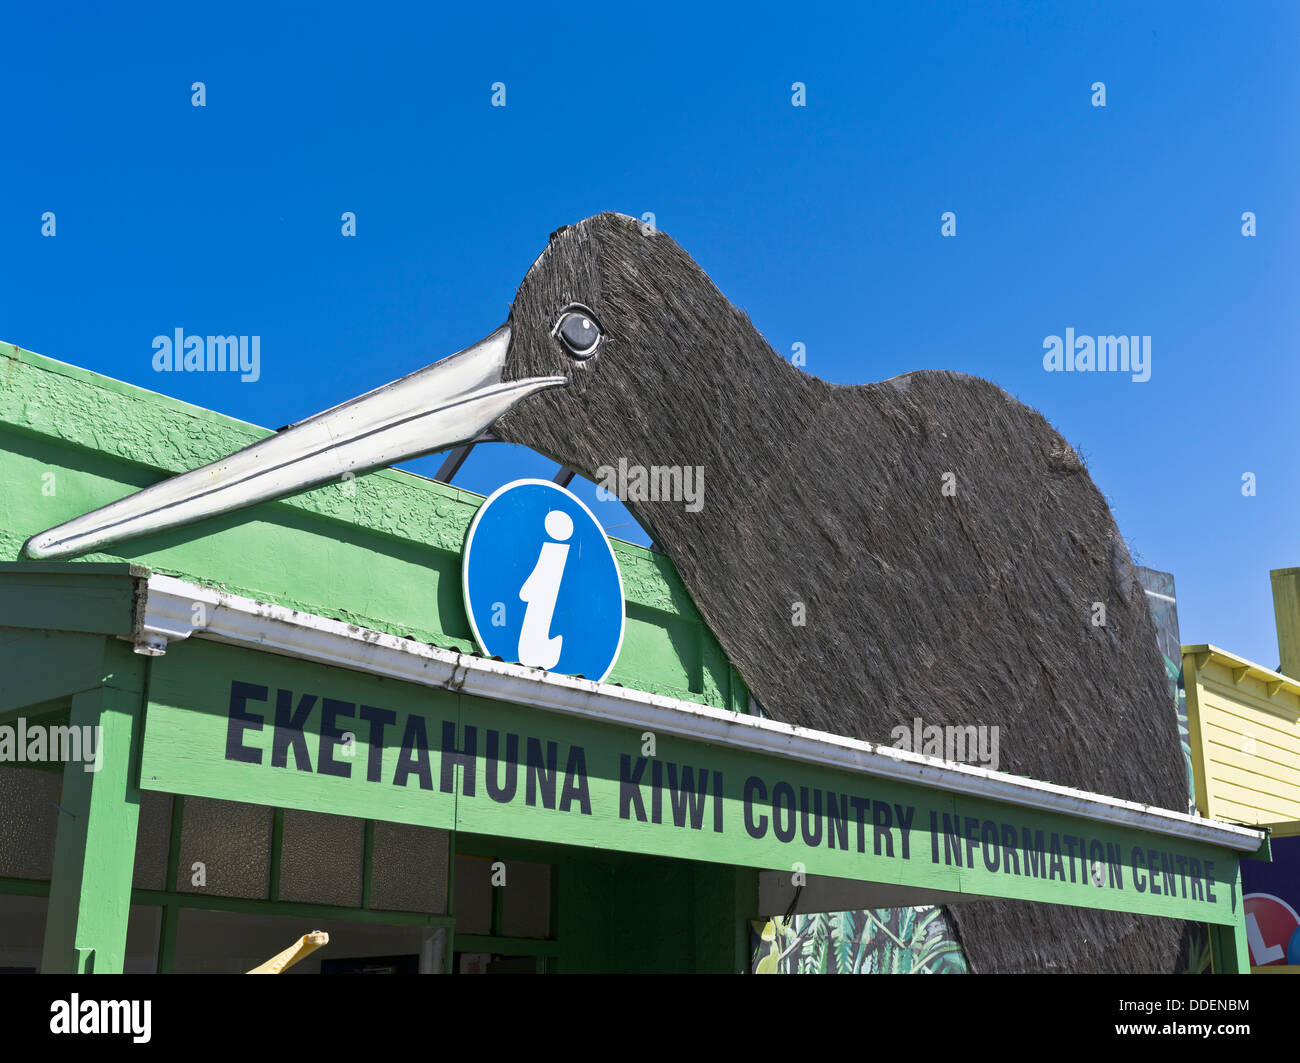 dh  EKETAHUNA NEW ZEALAND I site Kiwi Country information centre gaint Kiwi sign tourist logo tourism Stock Photo